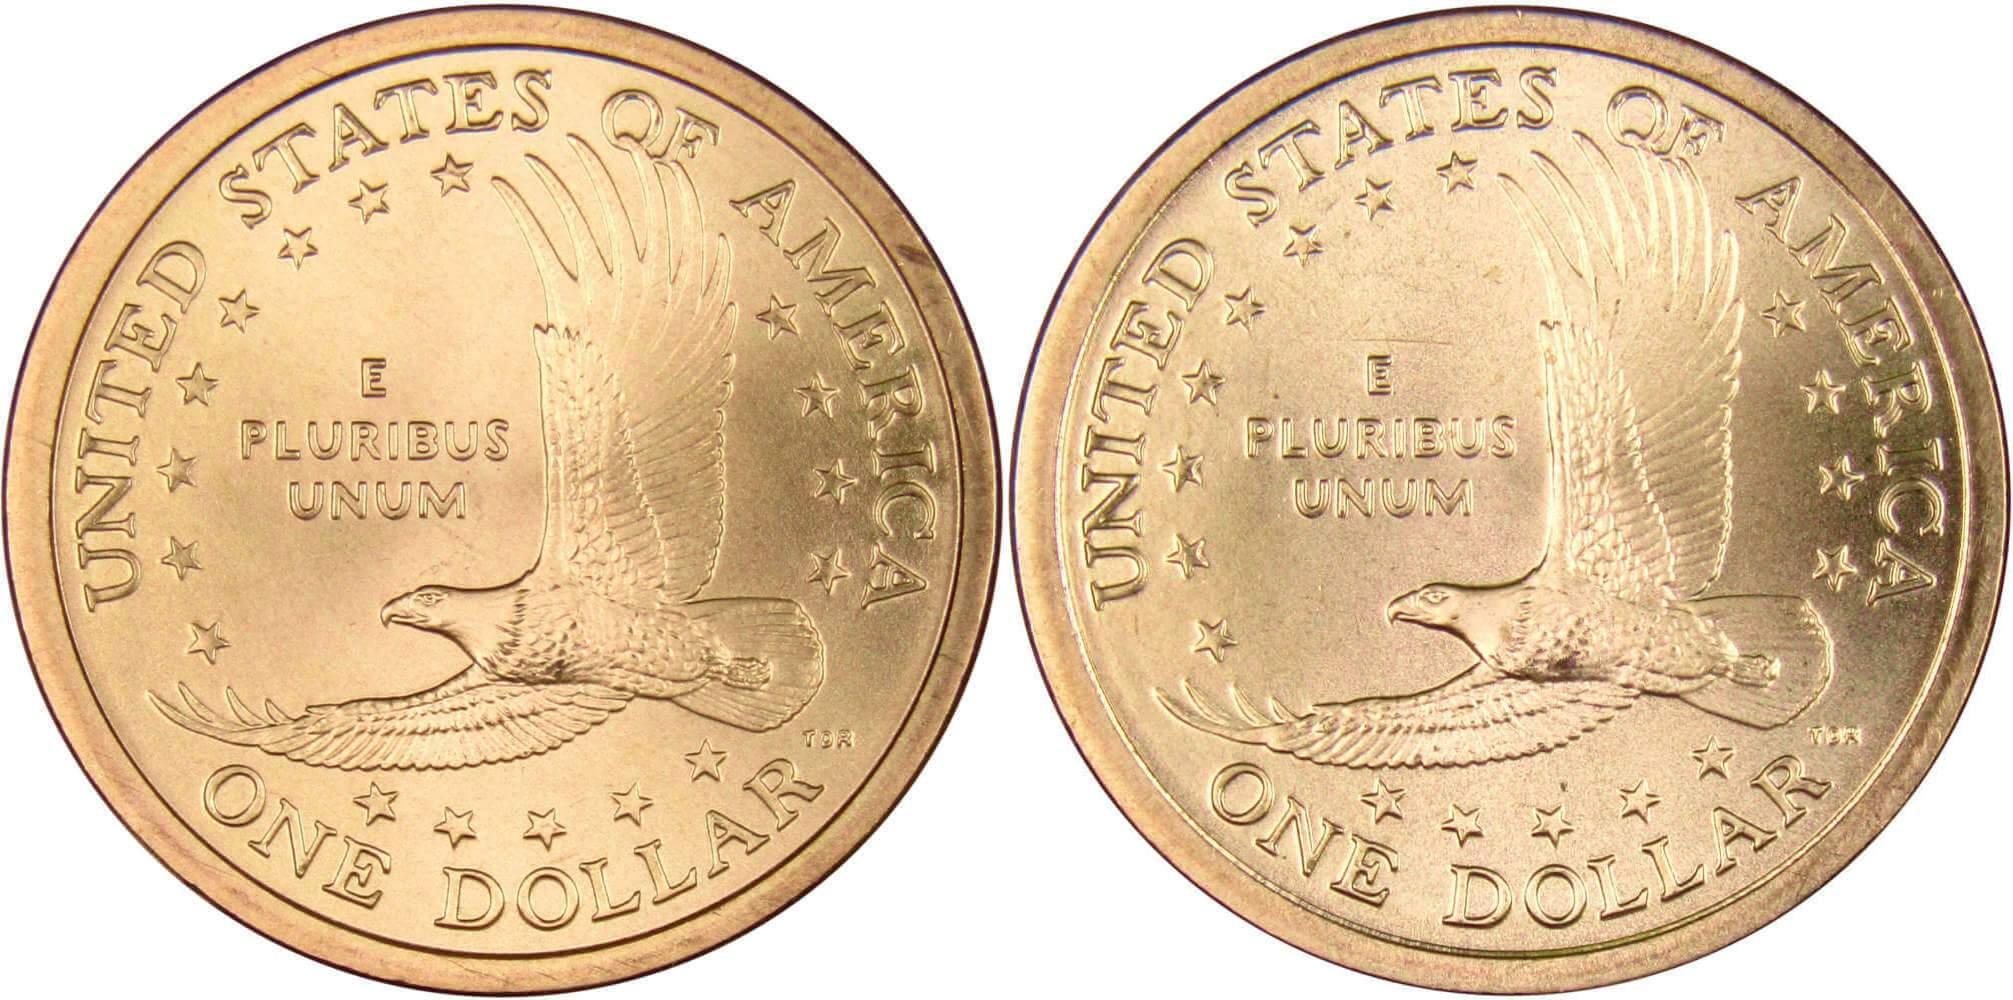 2006 P&D Sacagawea Native American Dollar 2 Coin Set BU Uncirculated $1